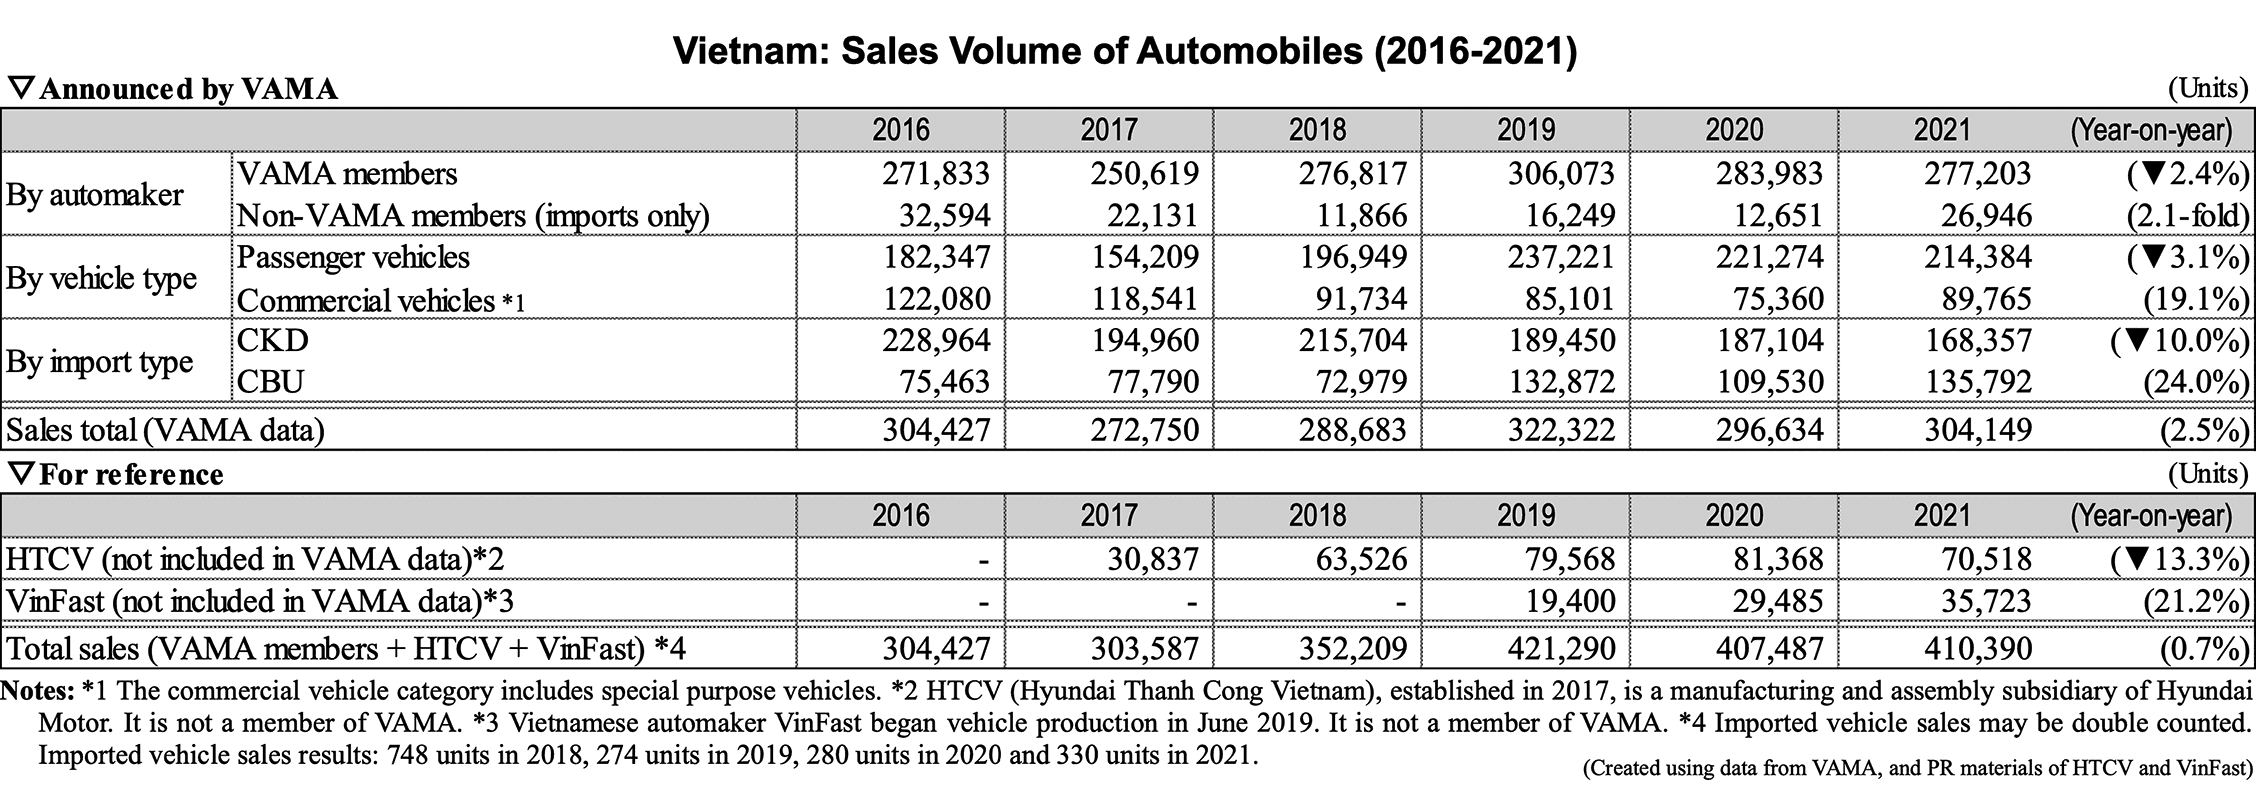 Table: Vietnam: Sales Volume of Automobiles (2016-2021)